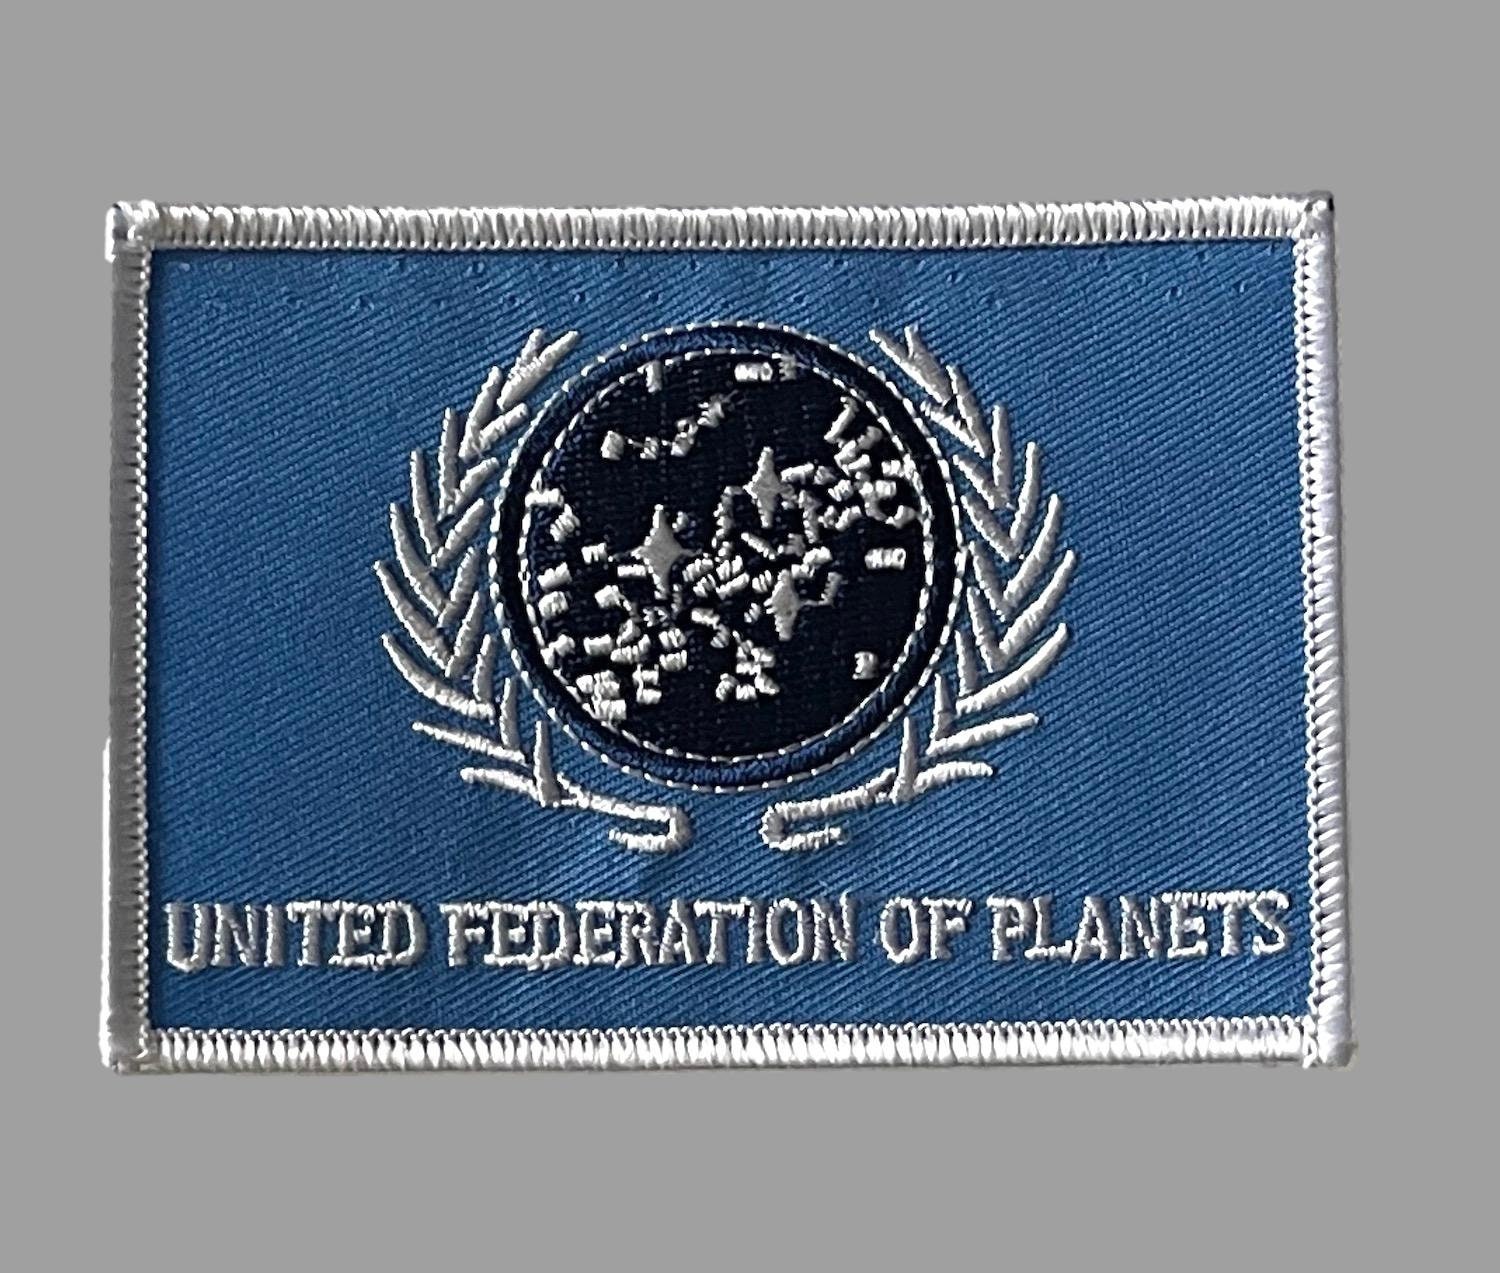 united federation of planets symbol